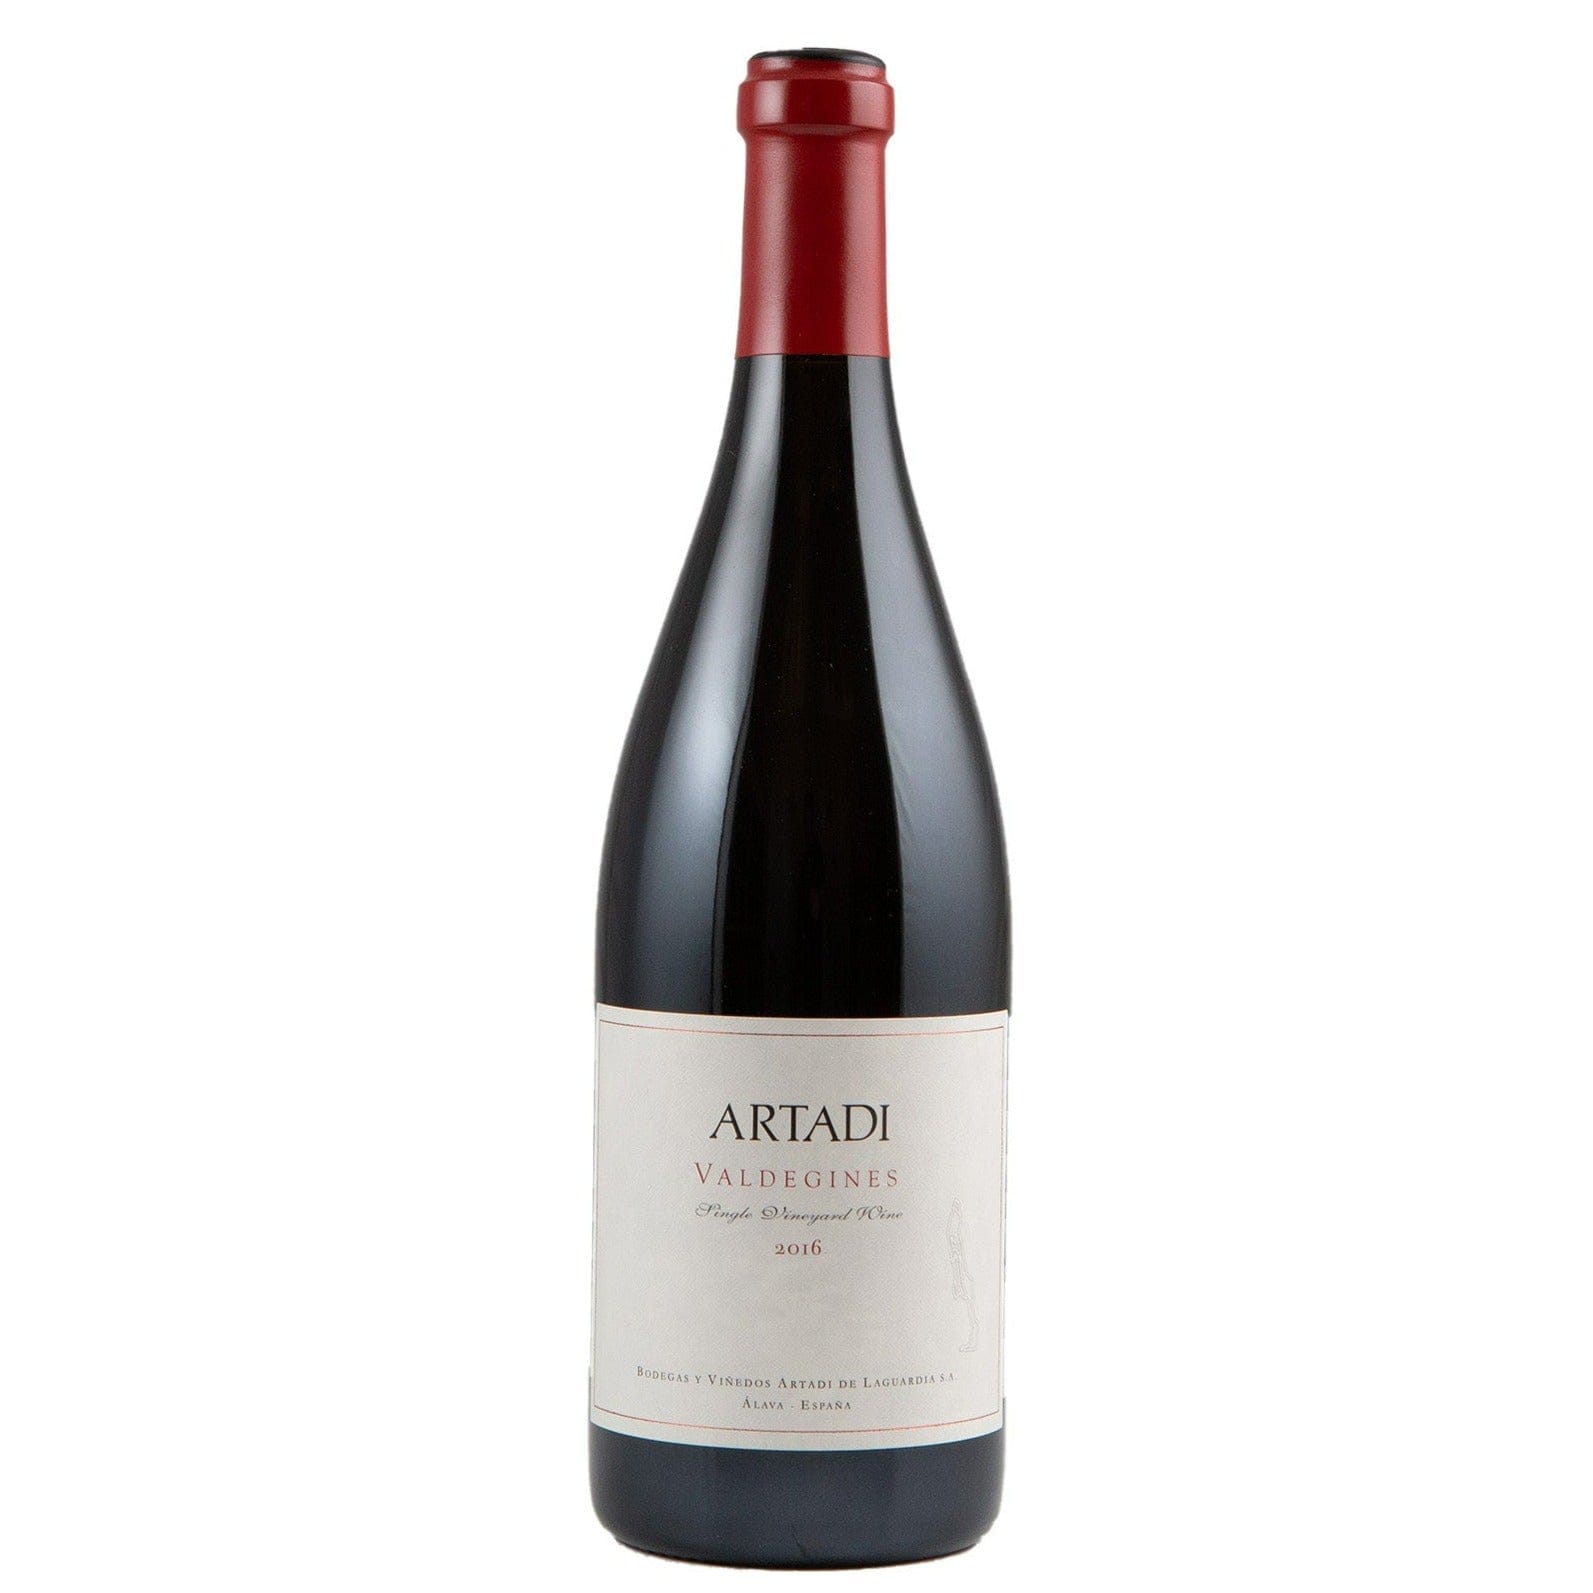 Single bottle of Red wine Artadi, Valdegines, Rioja Alavesa, 2016 100% Tempranillo